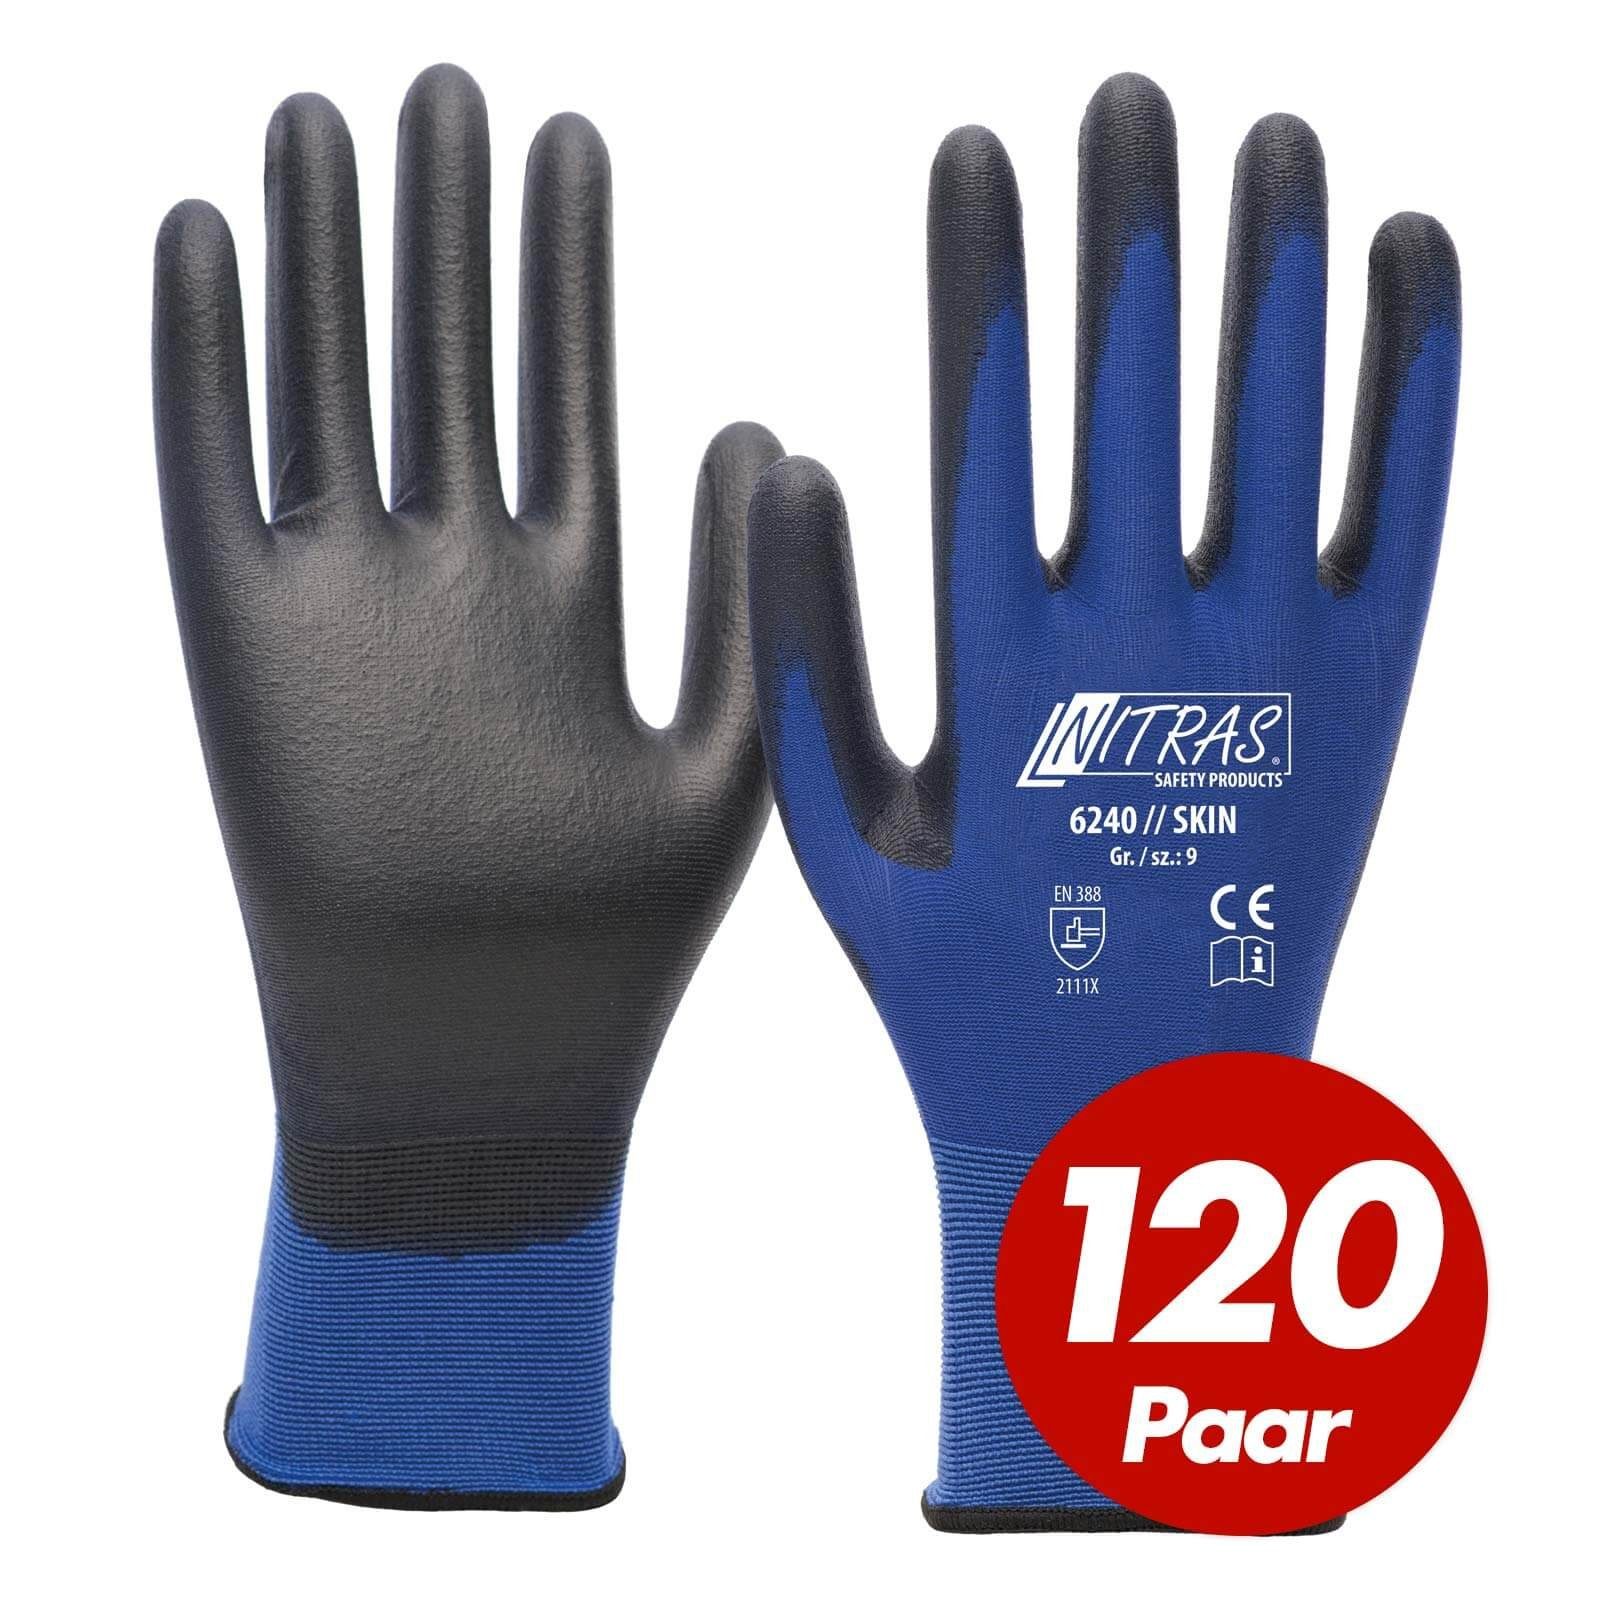 Nitras Nitril-Handschuhe NITRAS 6240 Skin Nylon-Strickhandschuhe, PU-Beschichtung - 120 Paar (Spar-Set) blau